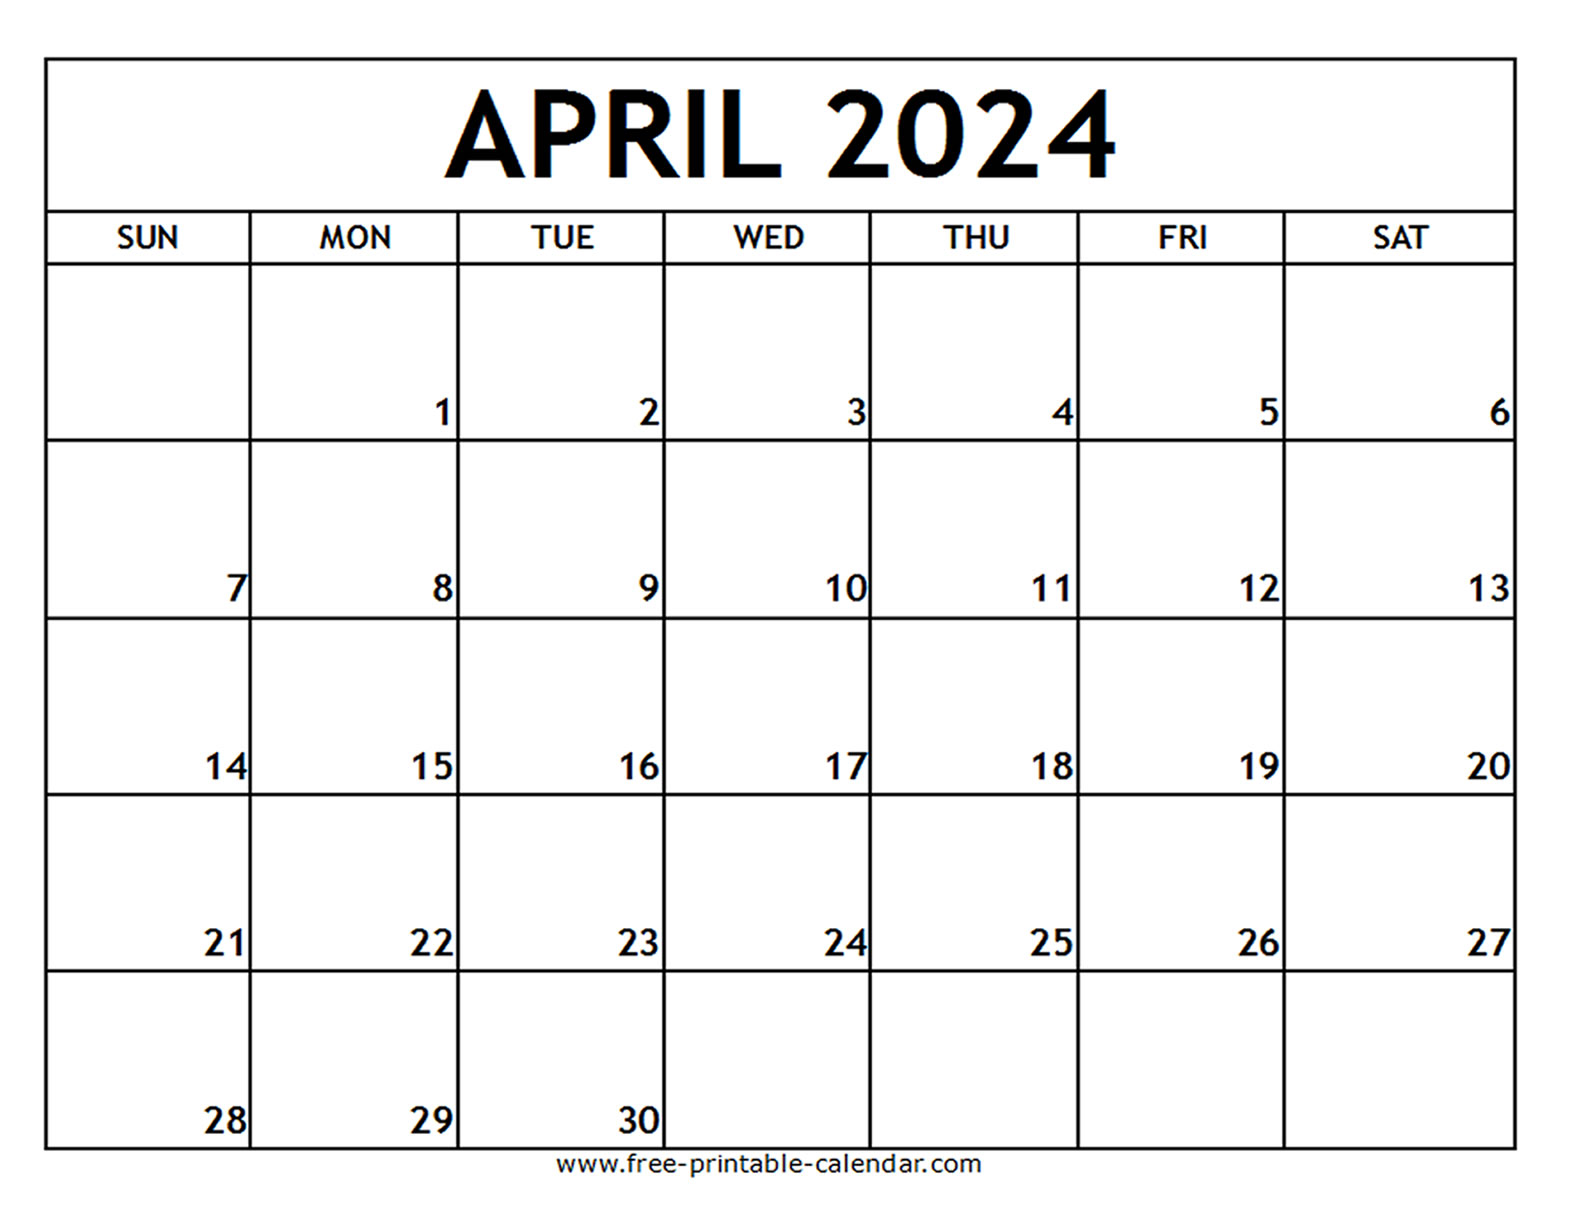 Free Printable April Calendar 2024 Download Chery Deirdre